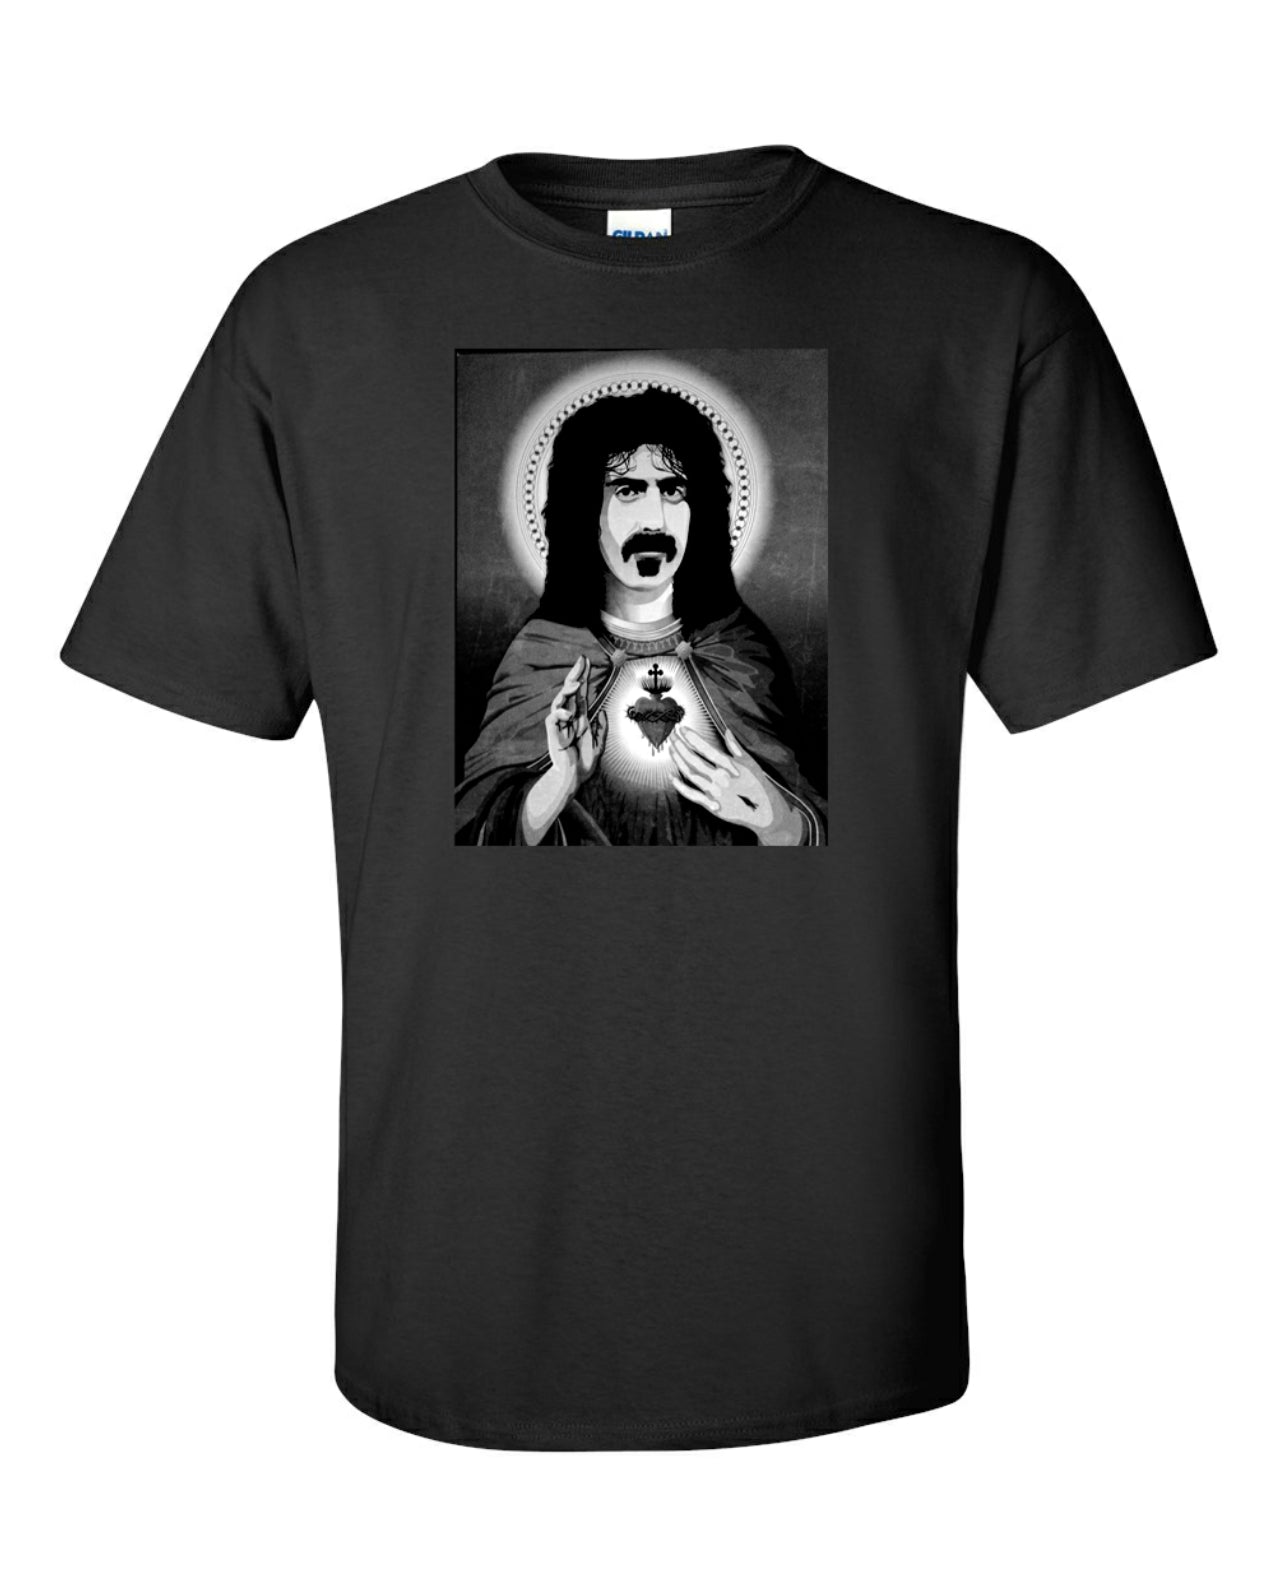 Frank Zappa T-Shirt - Lost In Sound Detroit